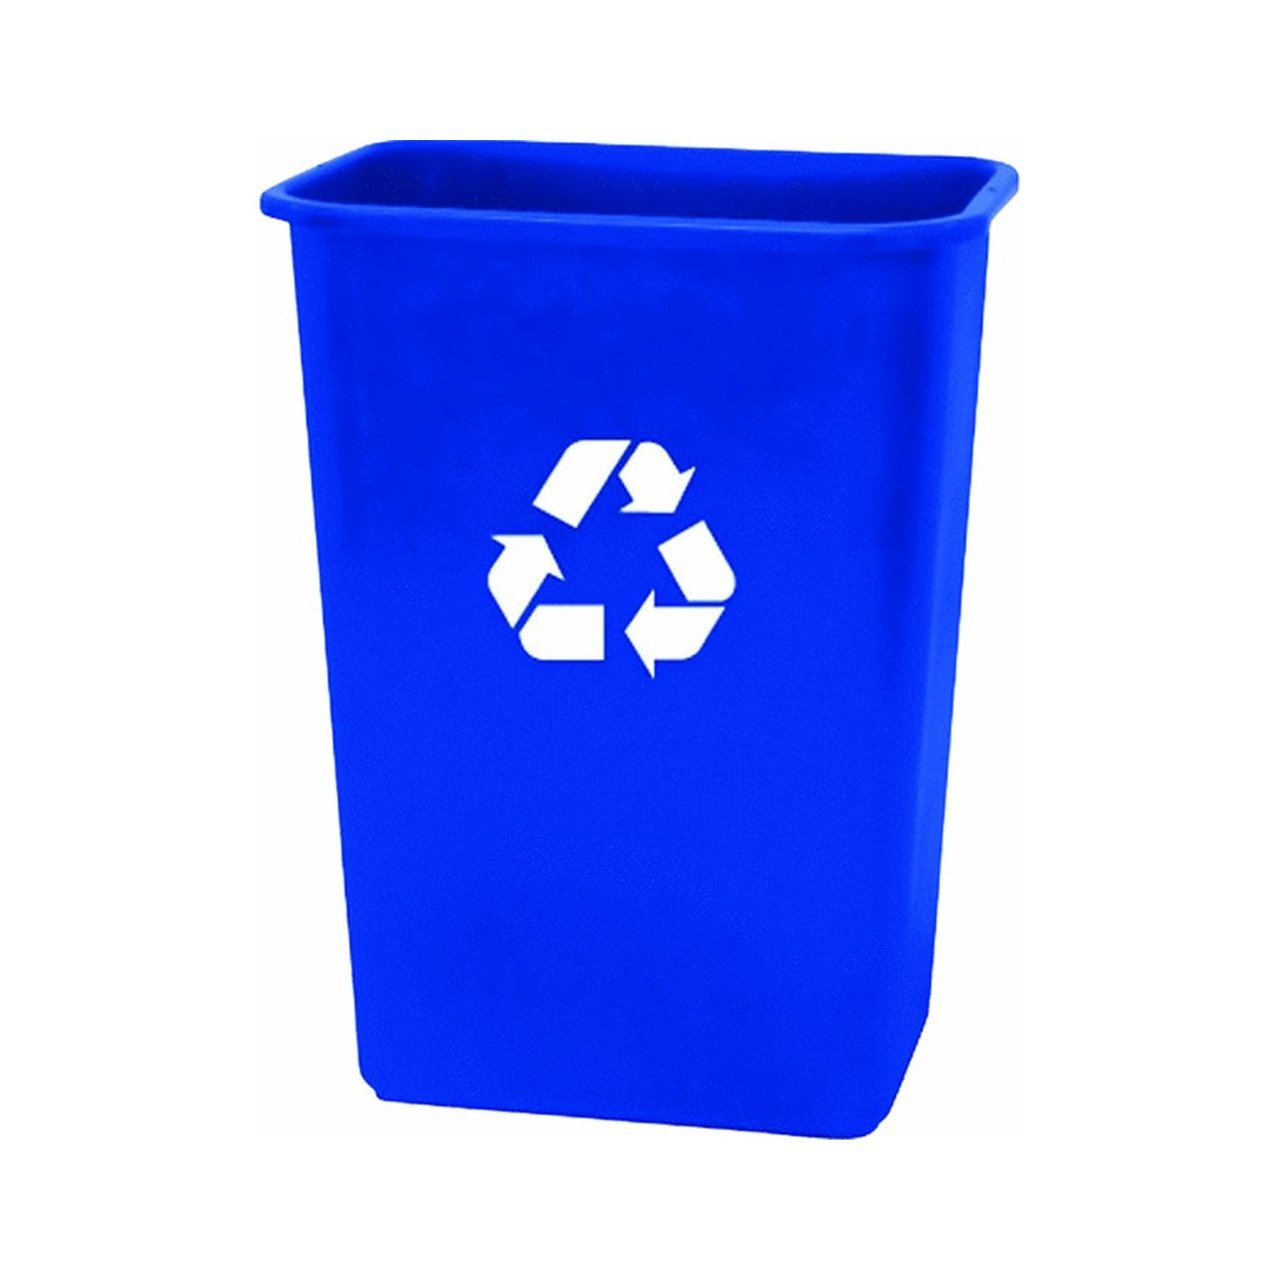 Shop Amazon.com | In-Home Recycling Bins